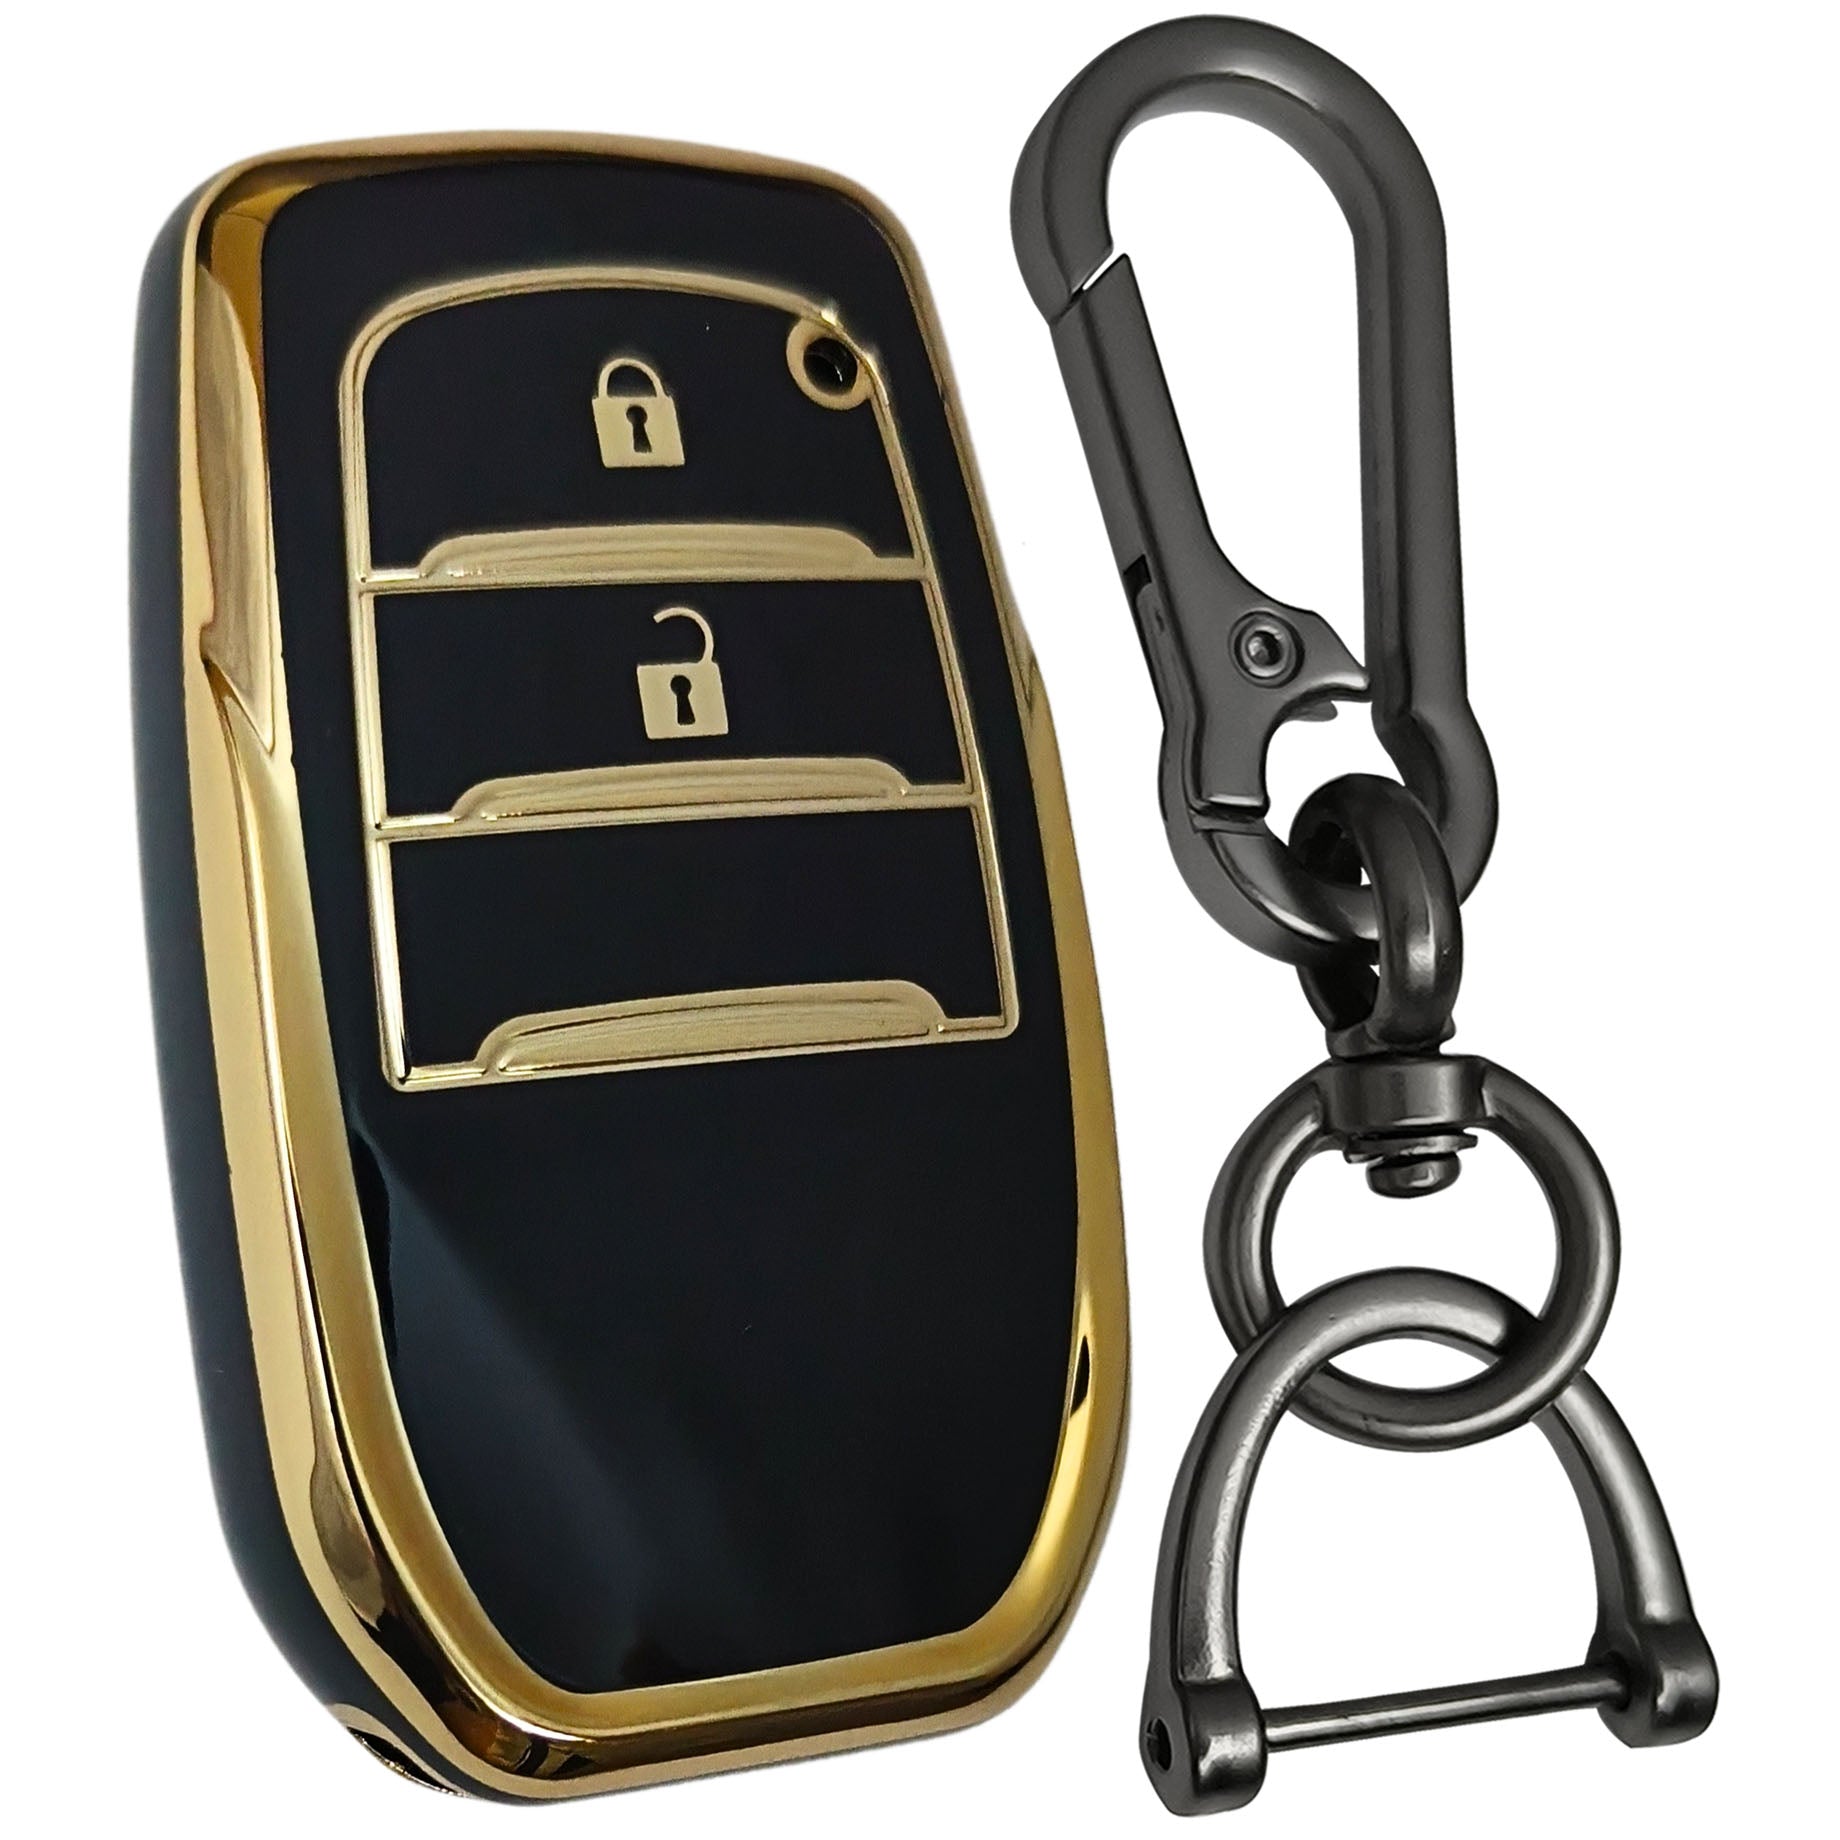 toyota fortuner innova crysta 2b smart tpu black gold key case keychain